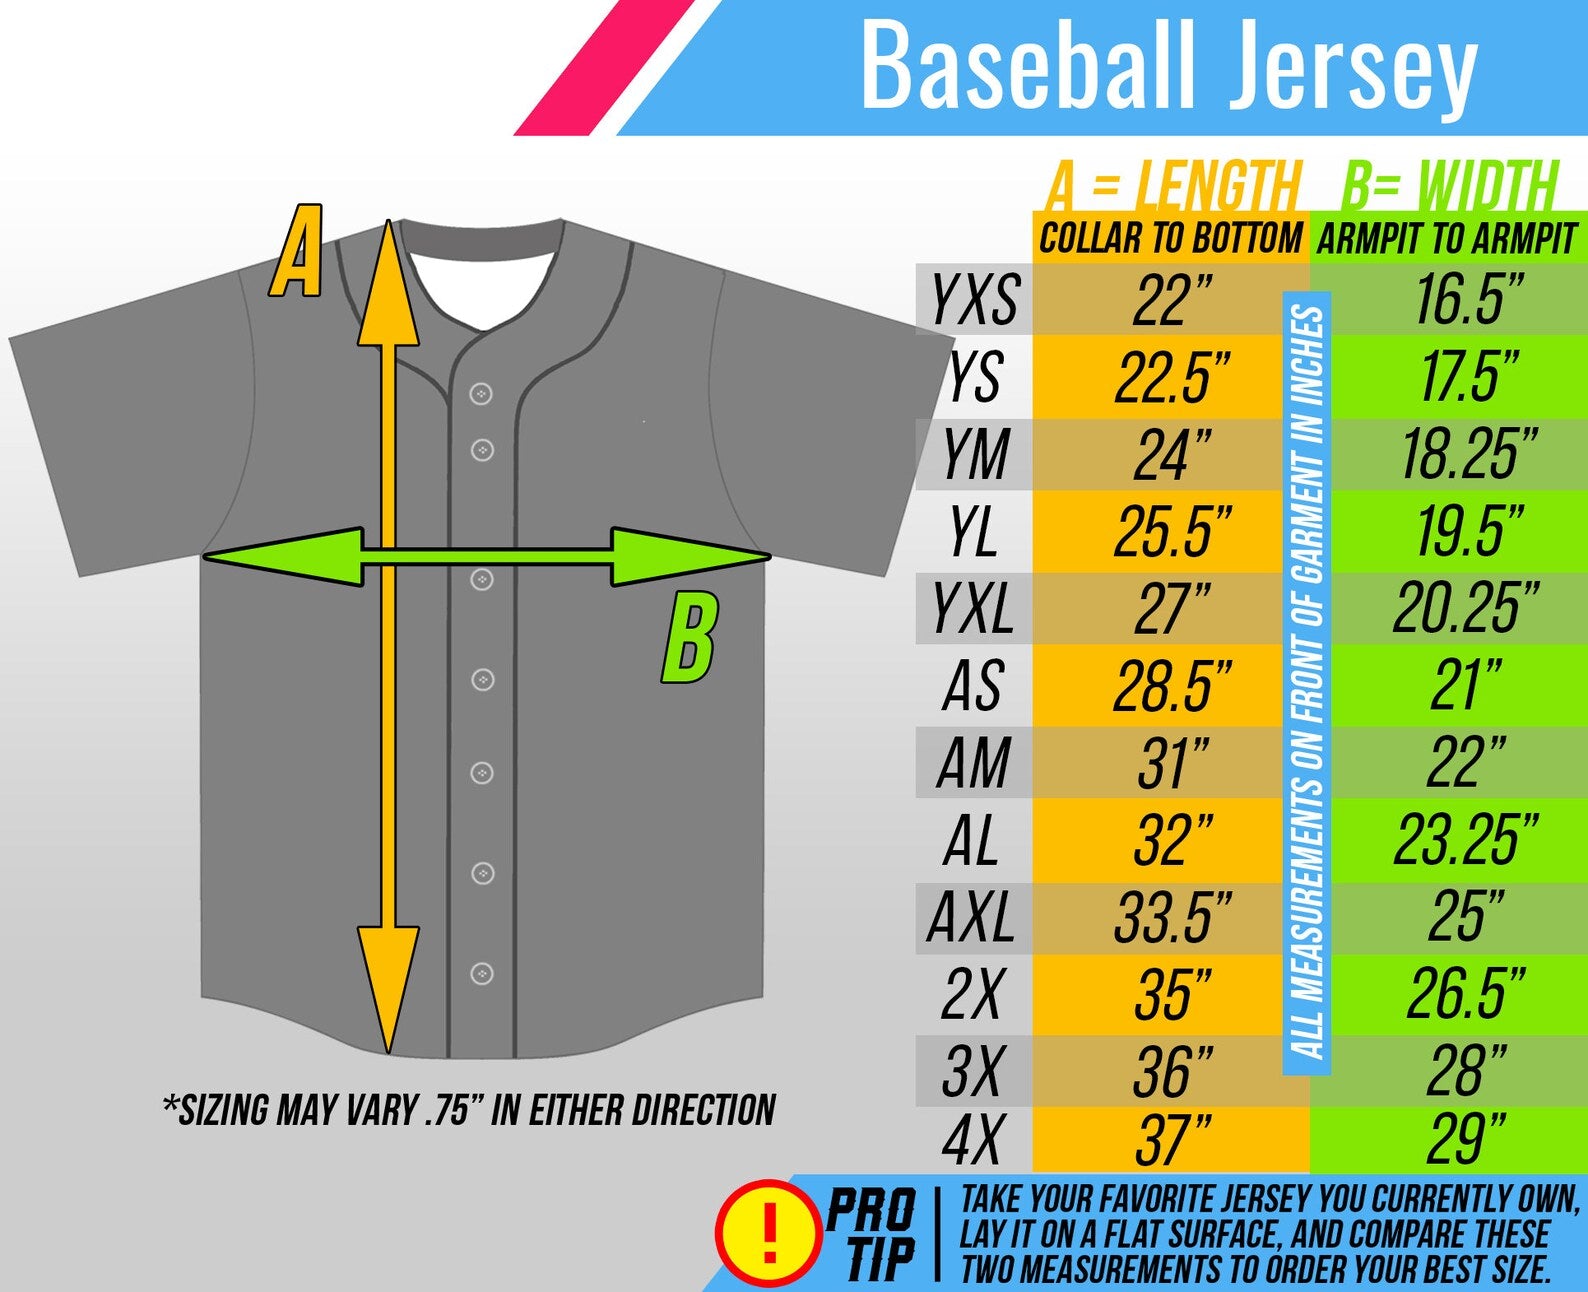 The Sandlot Jersey - Benny 'The Jet' Rodriguez Custom Baseball Jersey –  Retro City Threads